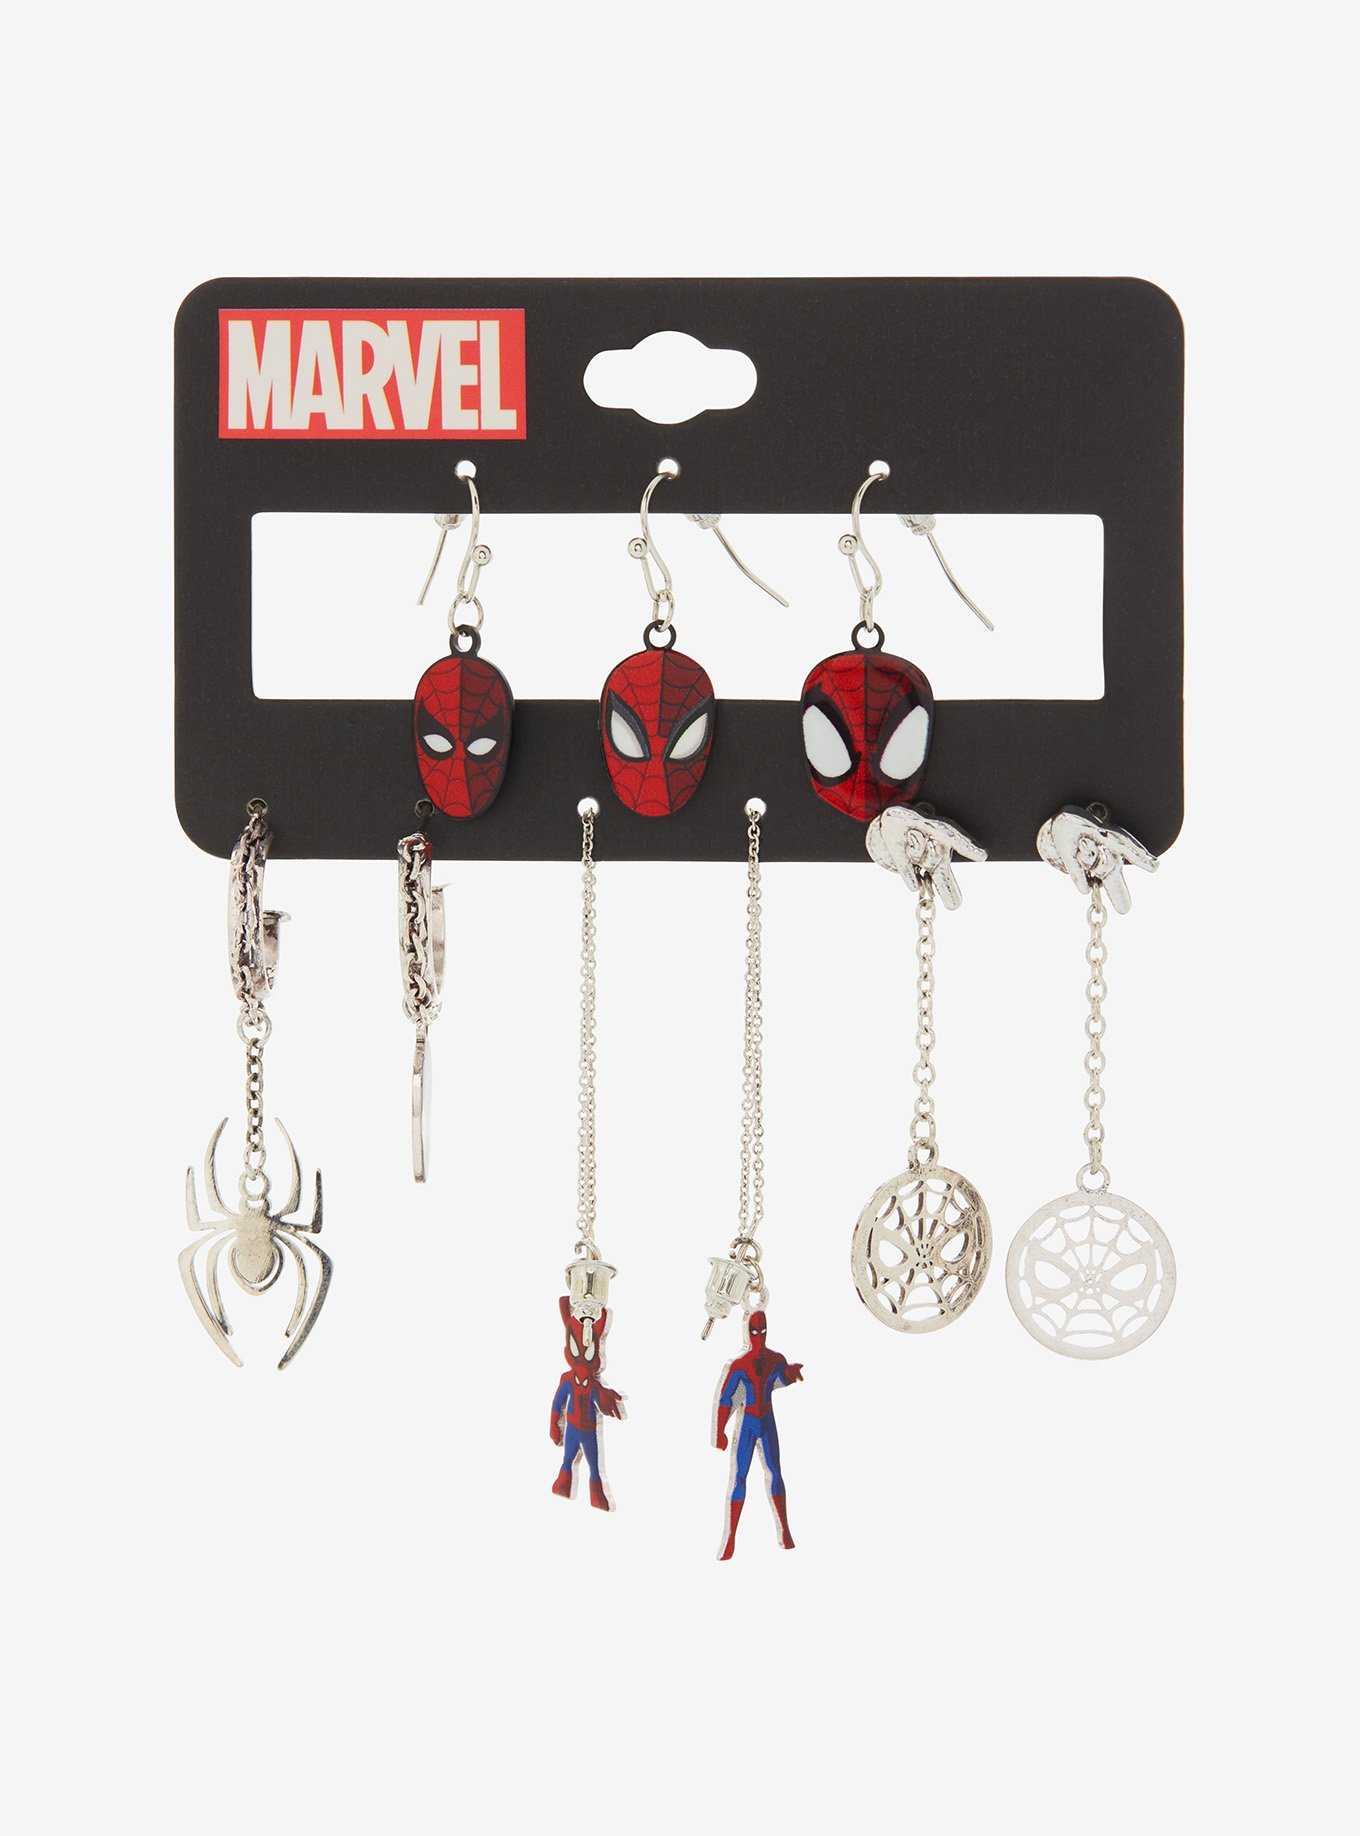  TJOJOYFUL Spiderman Necklace Set with 3 Spiderman